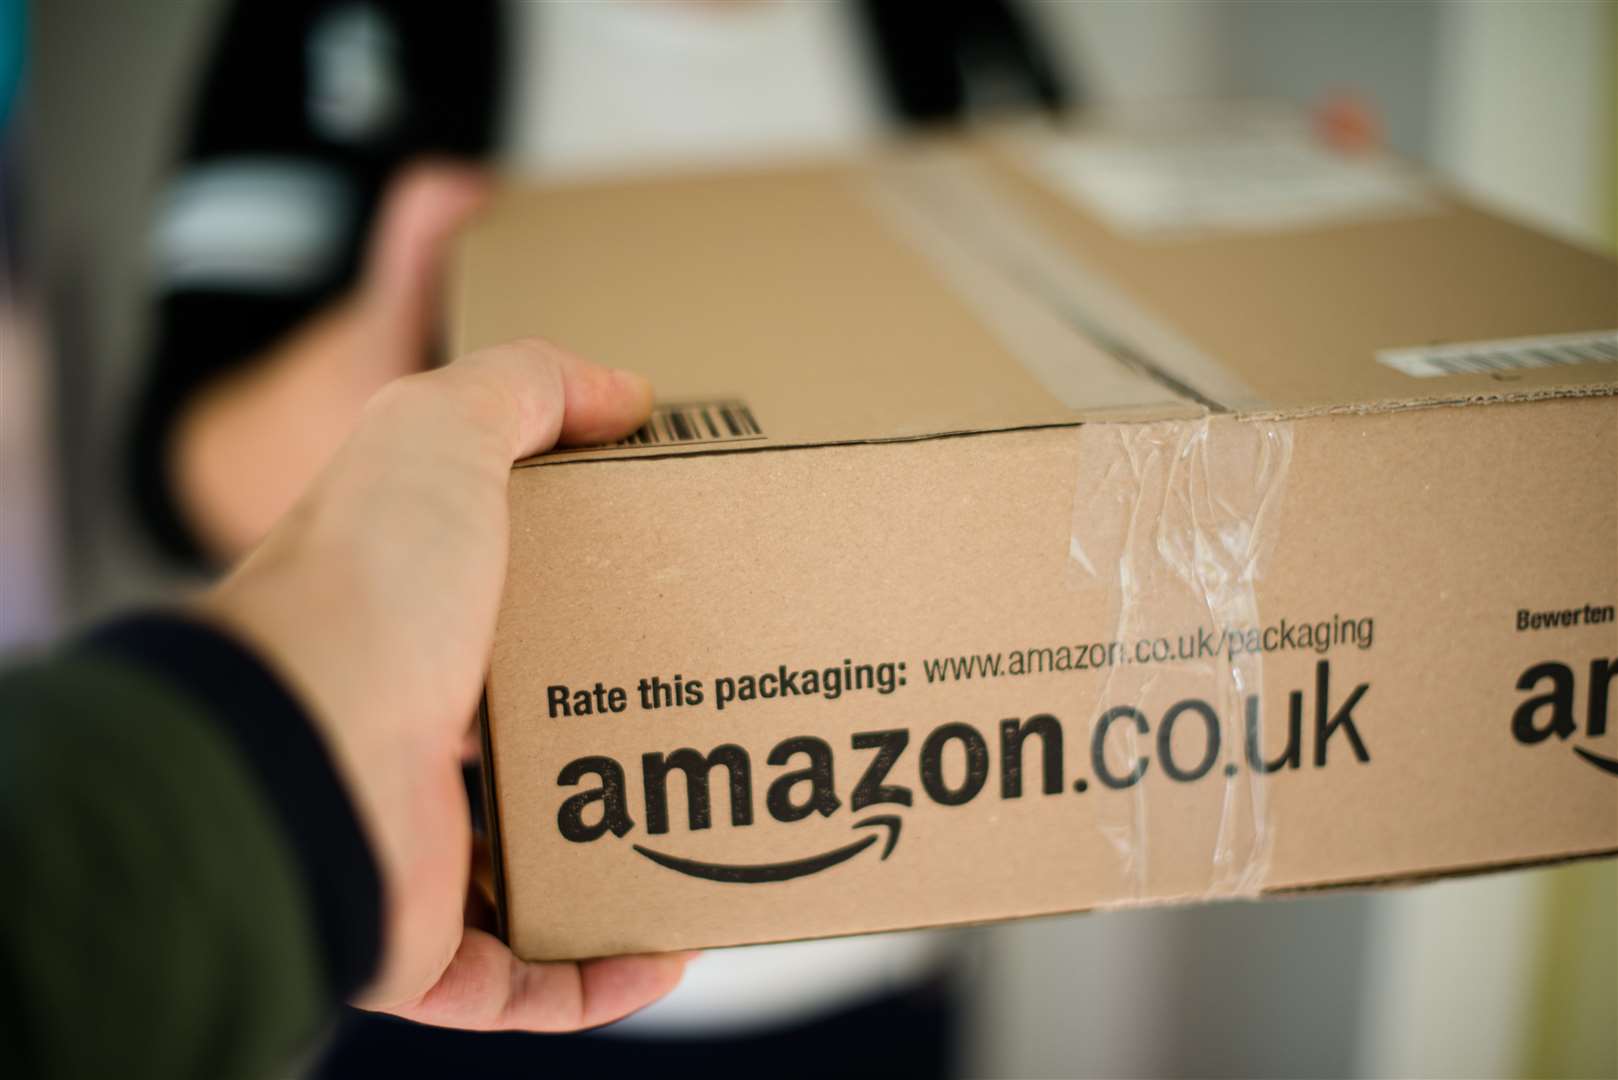 The scam is targetting Amazon customers. Image: iStock.